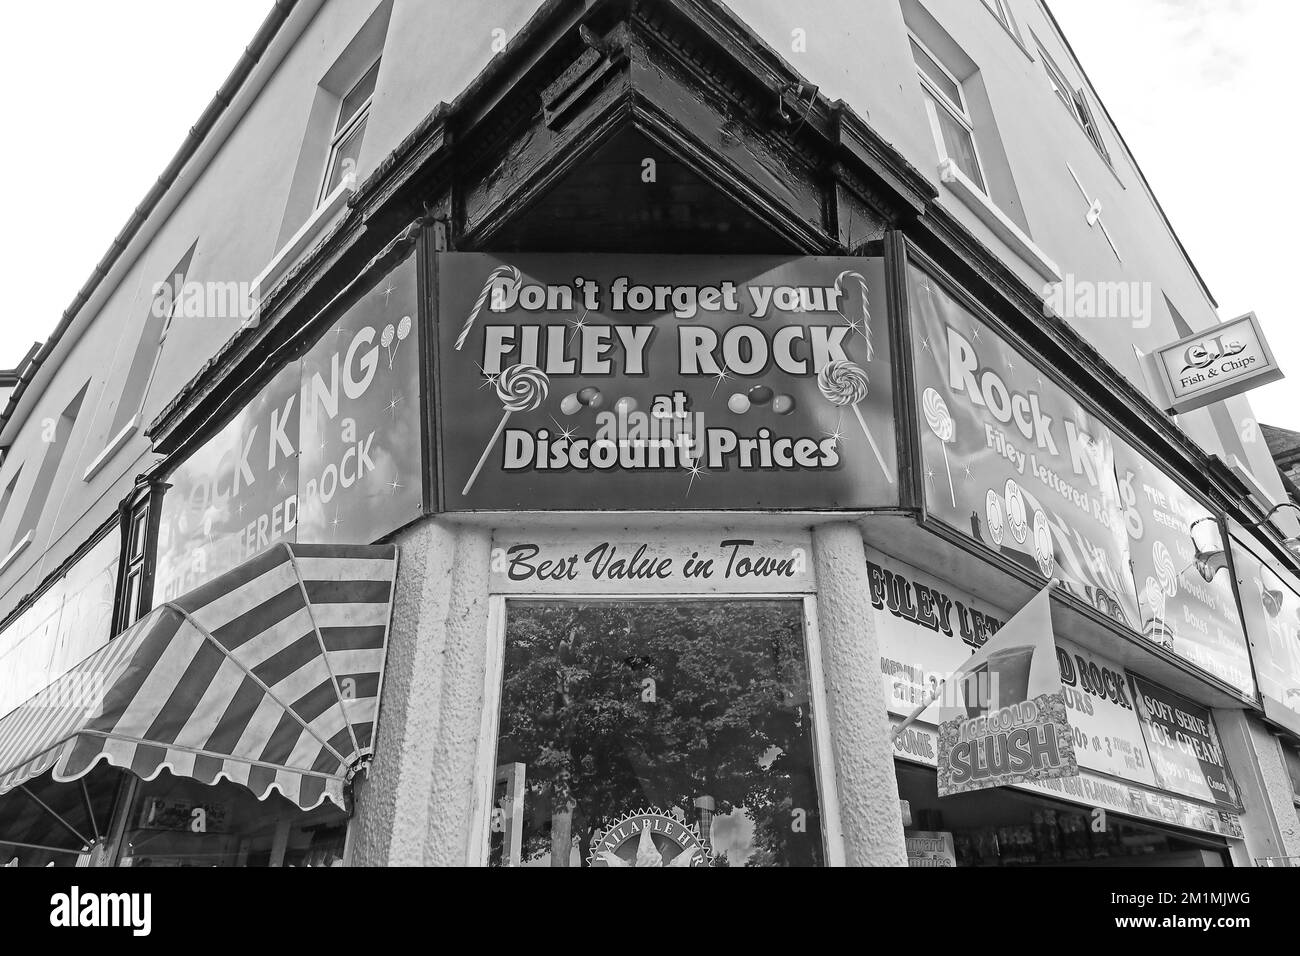 The Traditional Filey Rock Shop, Rabattpreise, Bestes Preis-Leistungs-Verhältnis in der Stadt, 46a Murray Street, Filey, North Yorkshire, England, UK, YO14 9DG Stockfoto